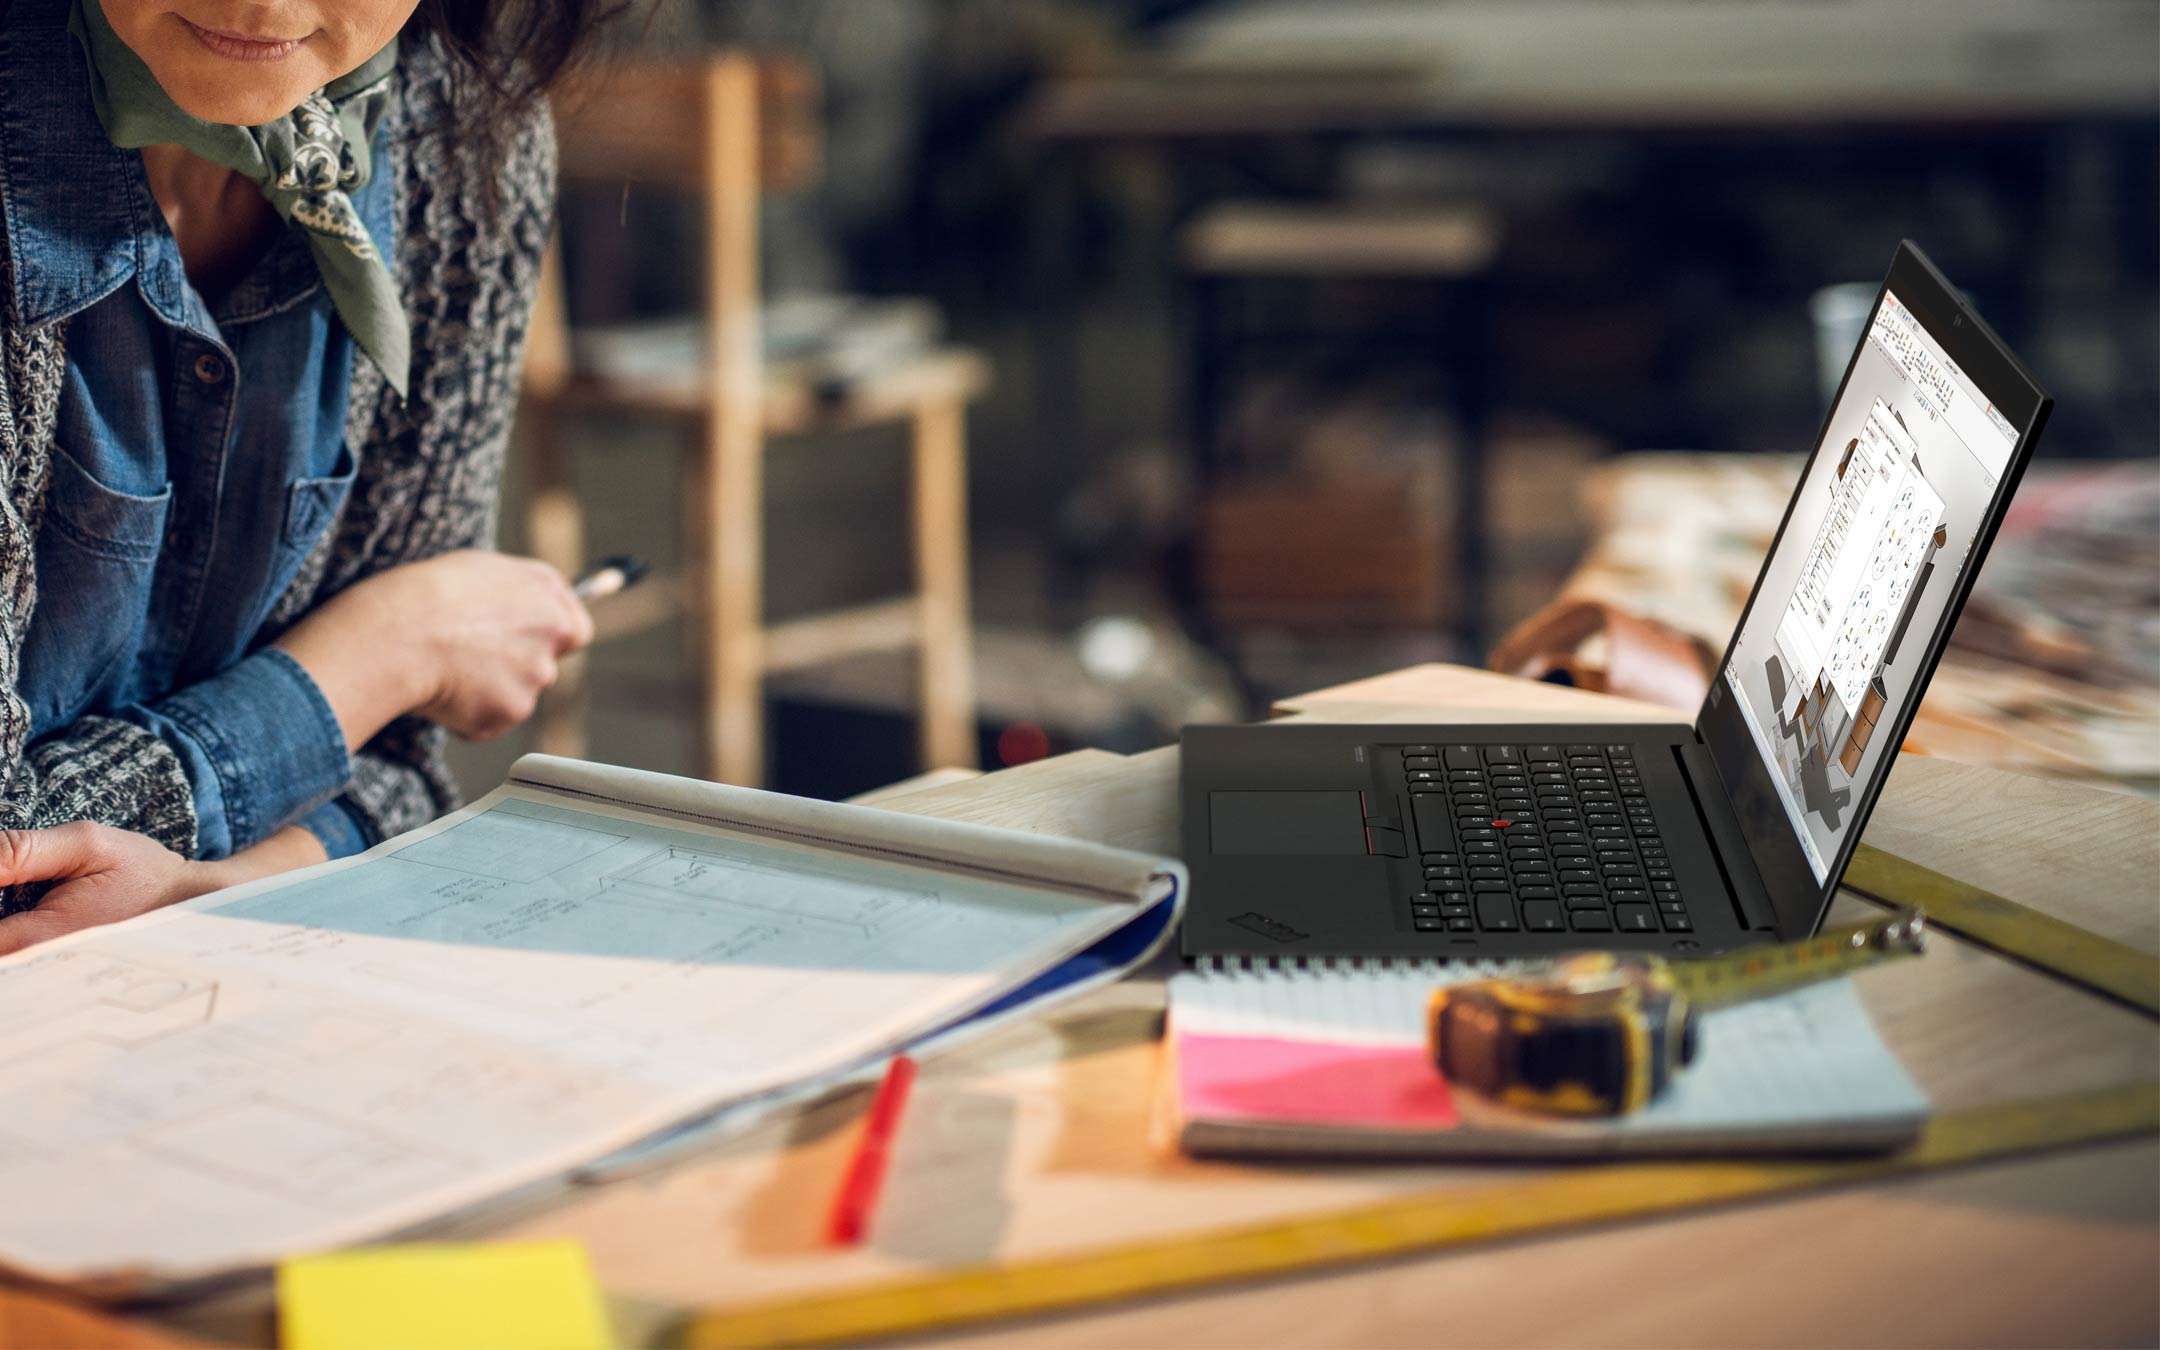 The new Lenovo ThinkPad P series workstations